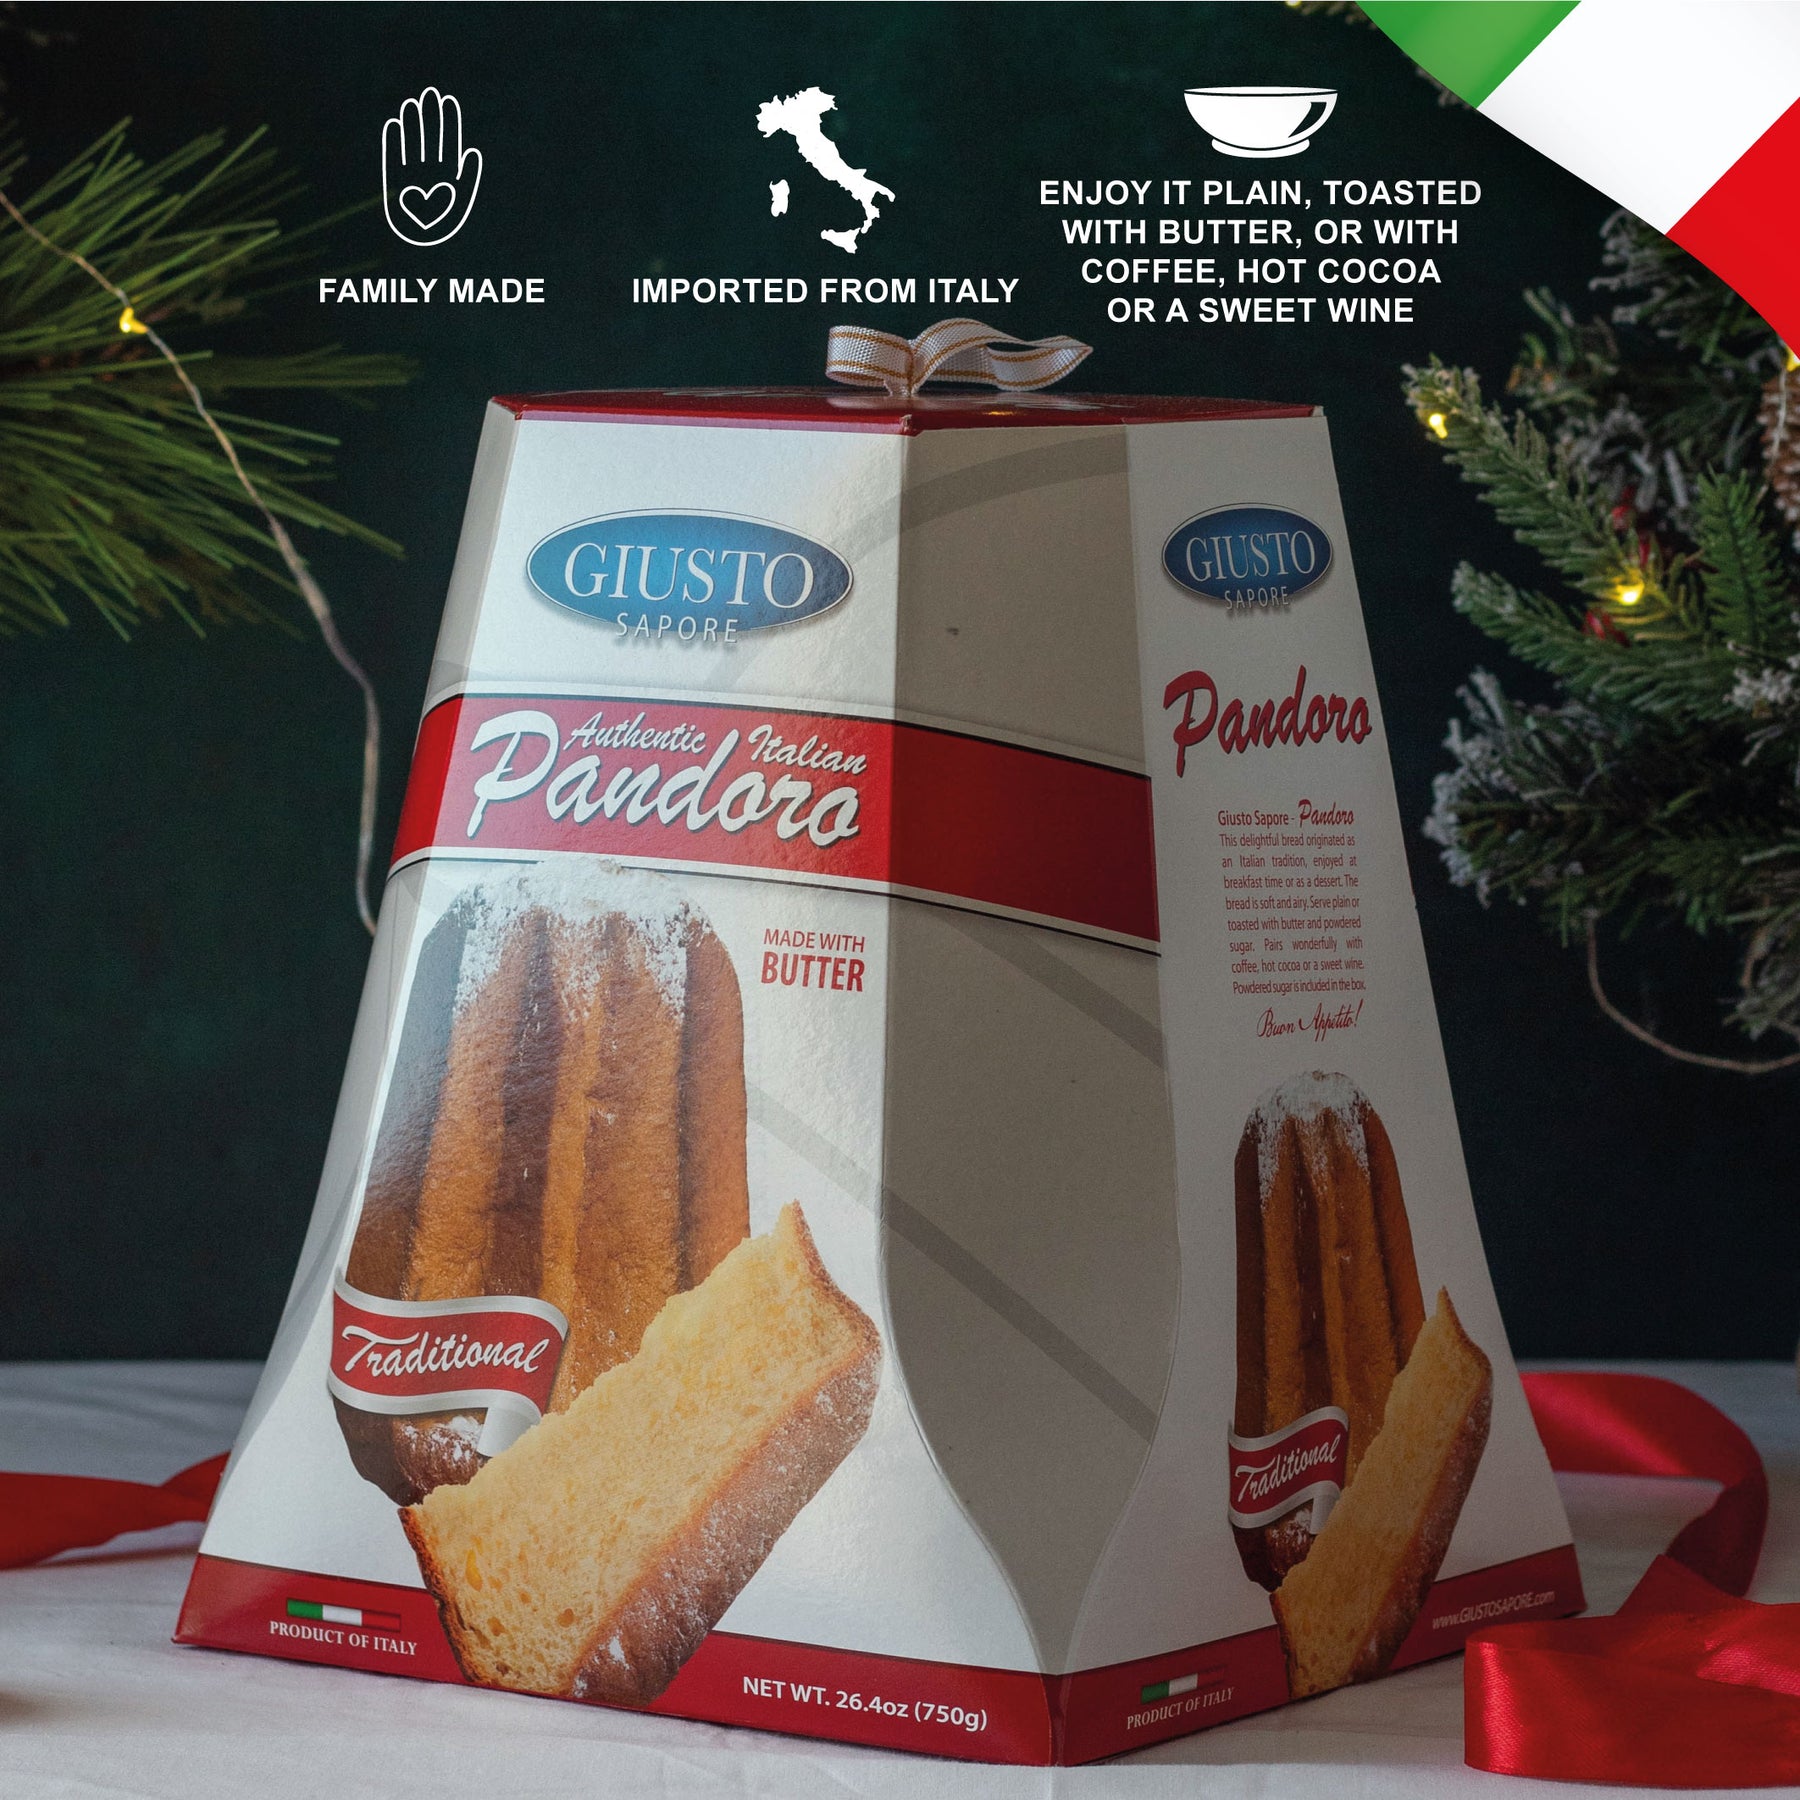 Pandoro (sweet Italian Holiday bread) - Vintage Kitchen Notes